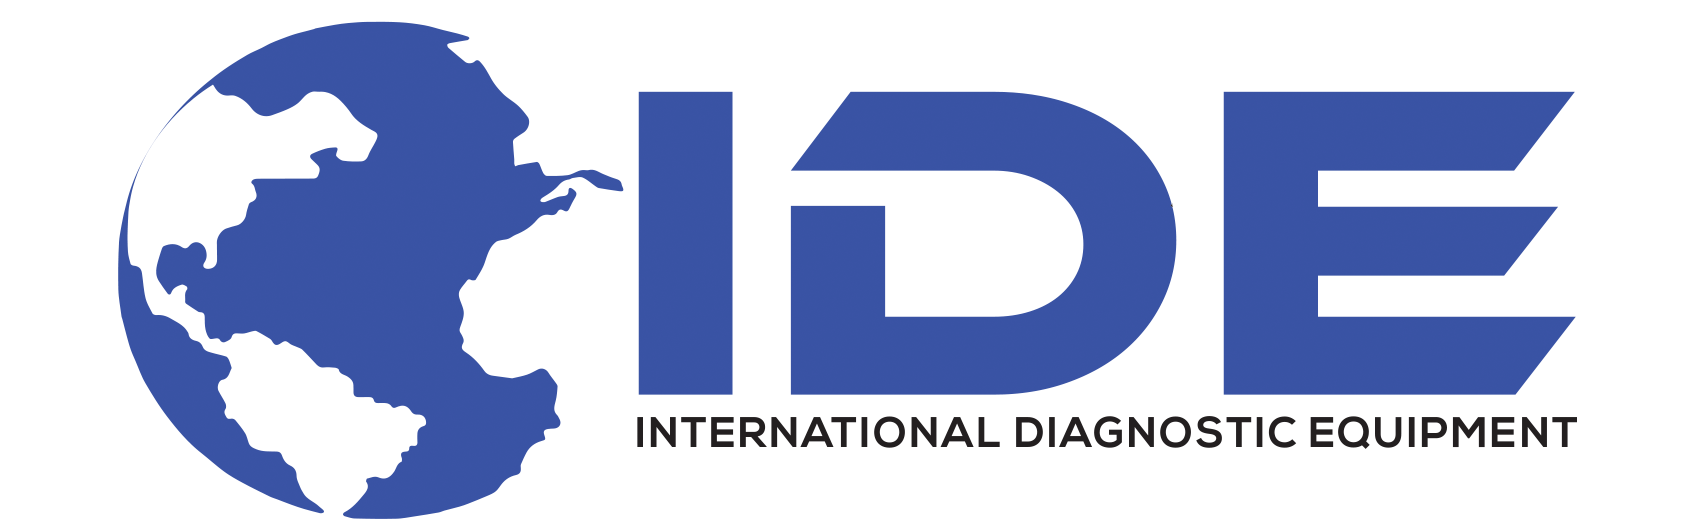 International Diagnostic Equipment